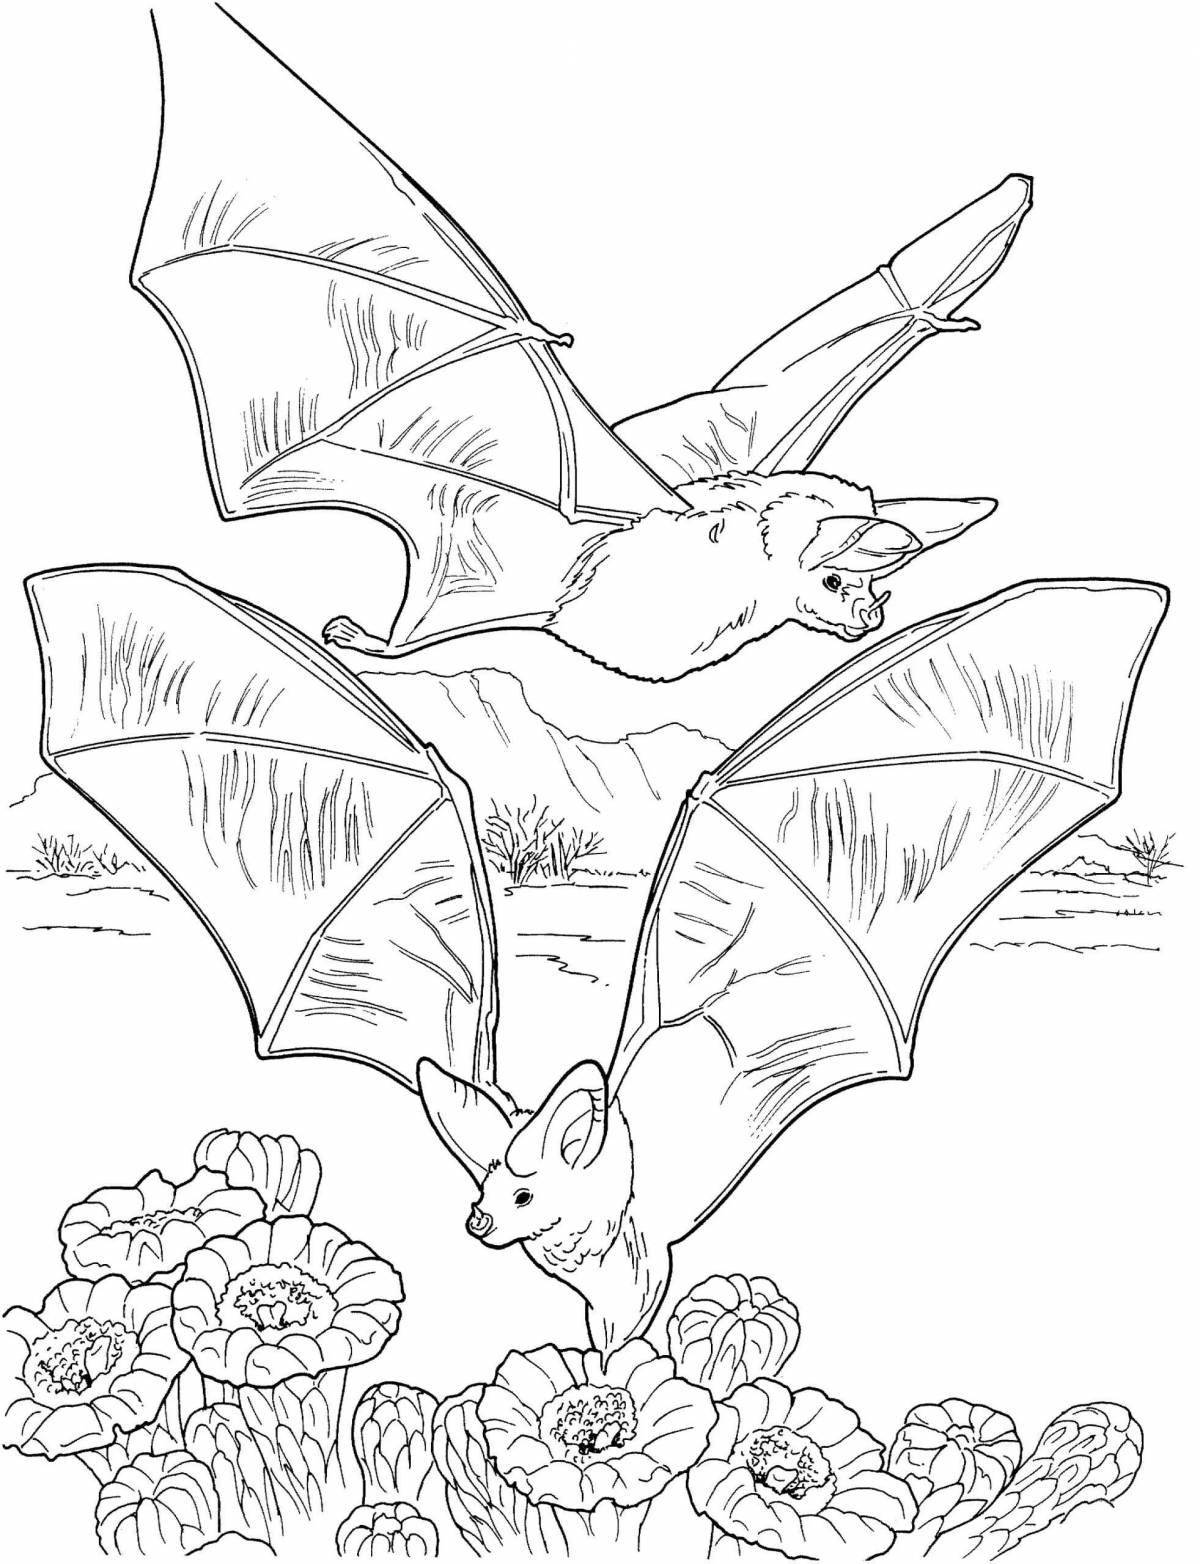 Fantastic bat coloring page